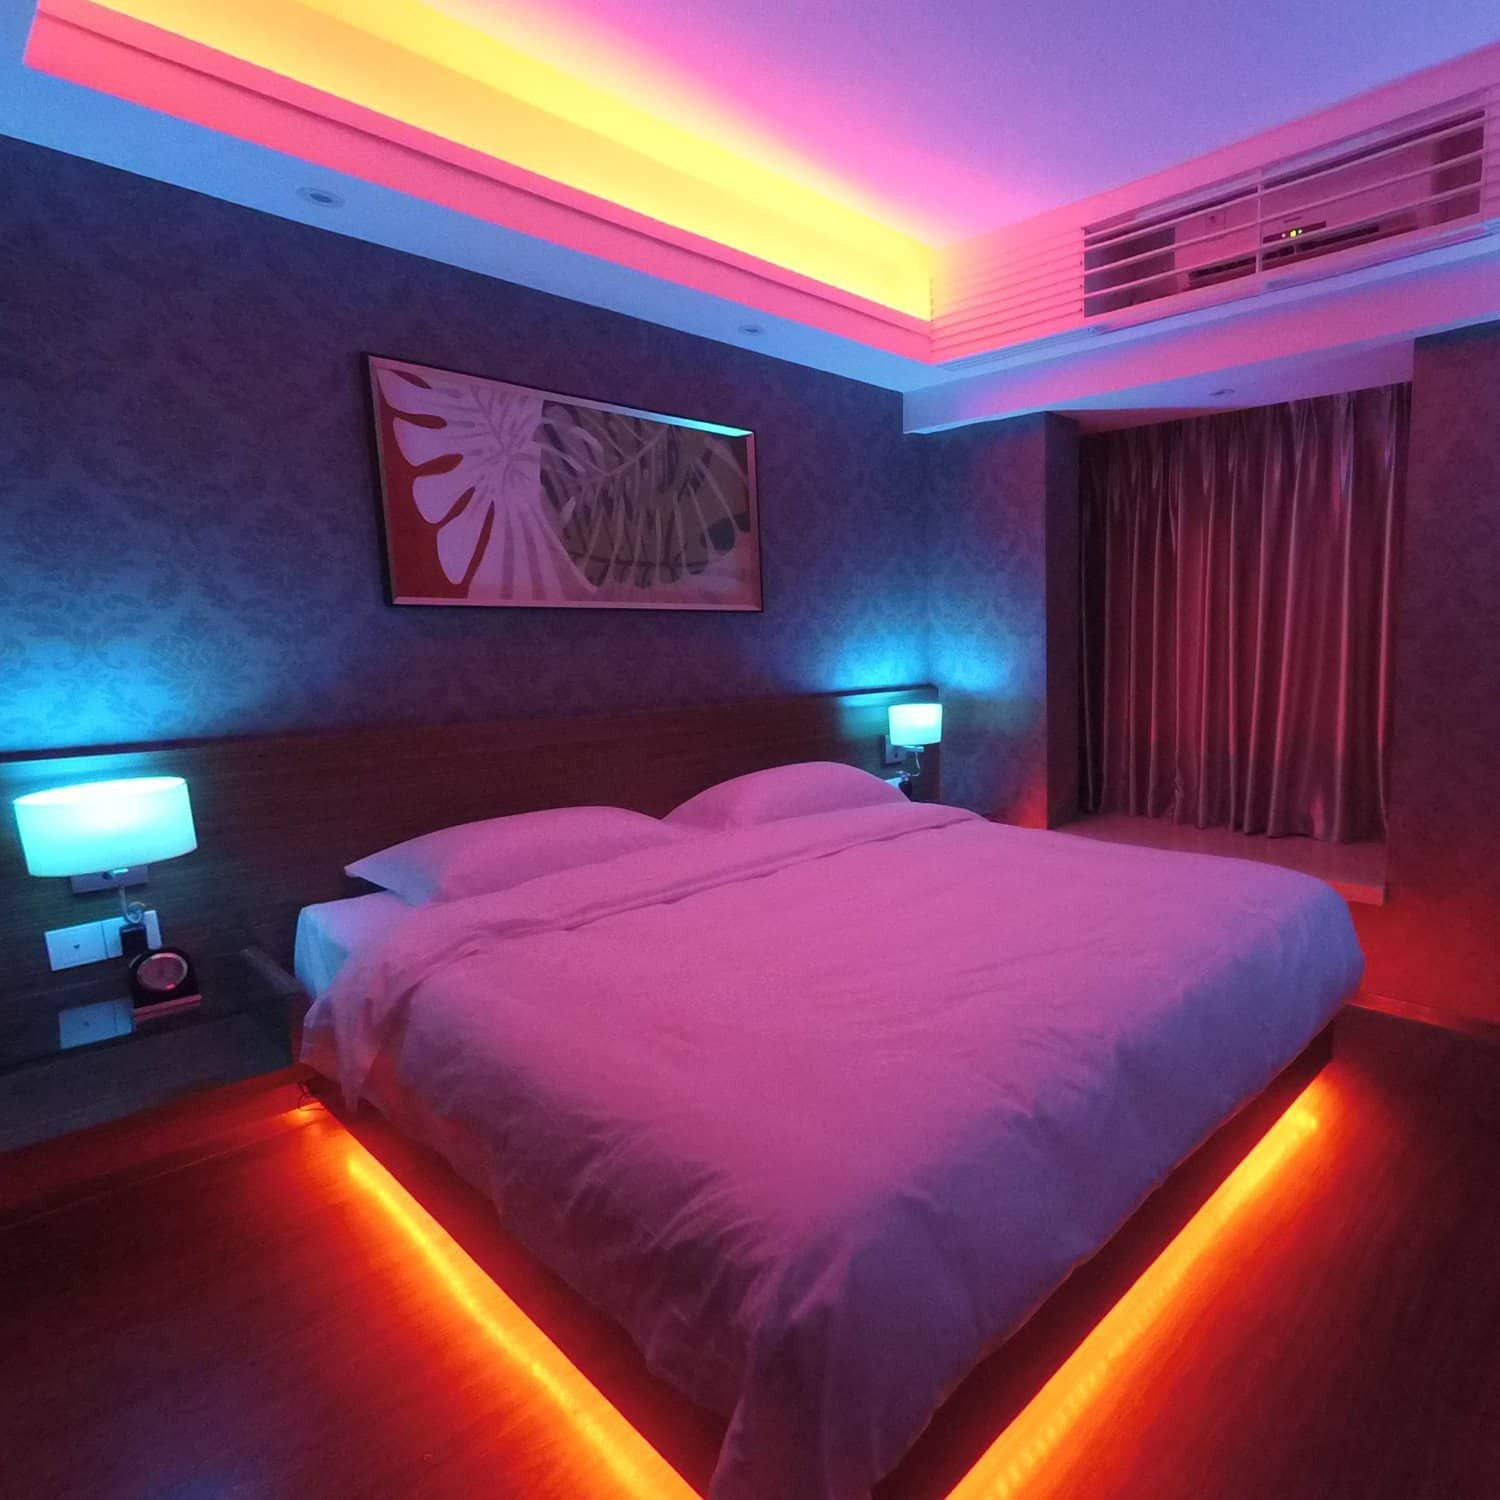 Led Strip Lights Bedroom
 Revogi Smart Color LED Light Strip Reviews Coupons and Deals